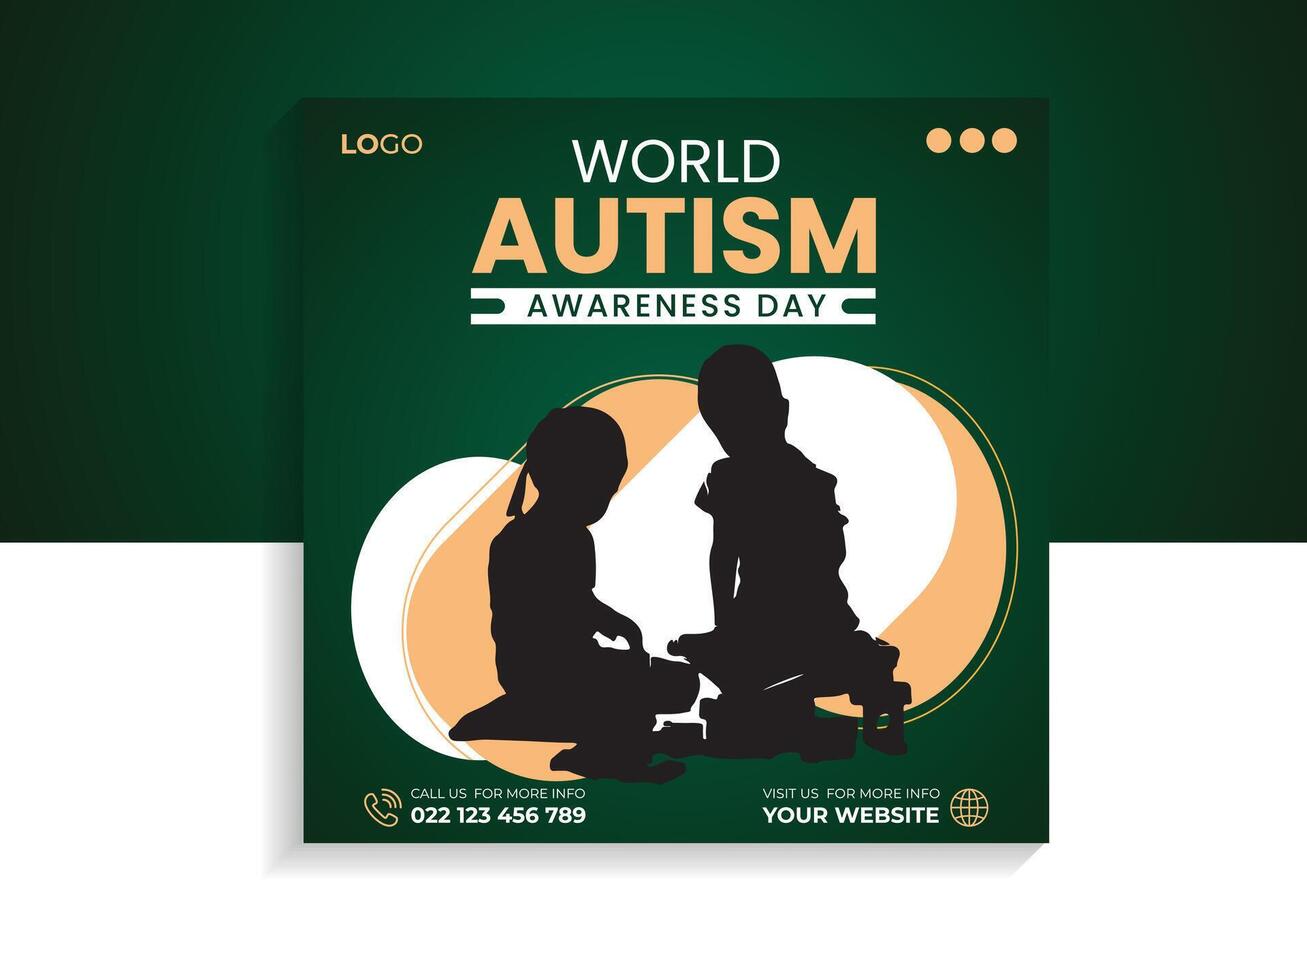 World autism awareness day social media banner template vector